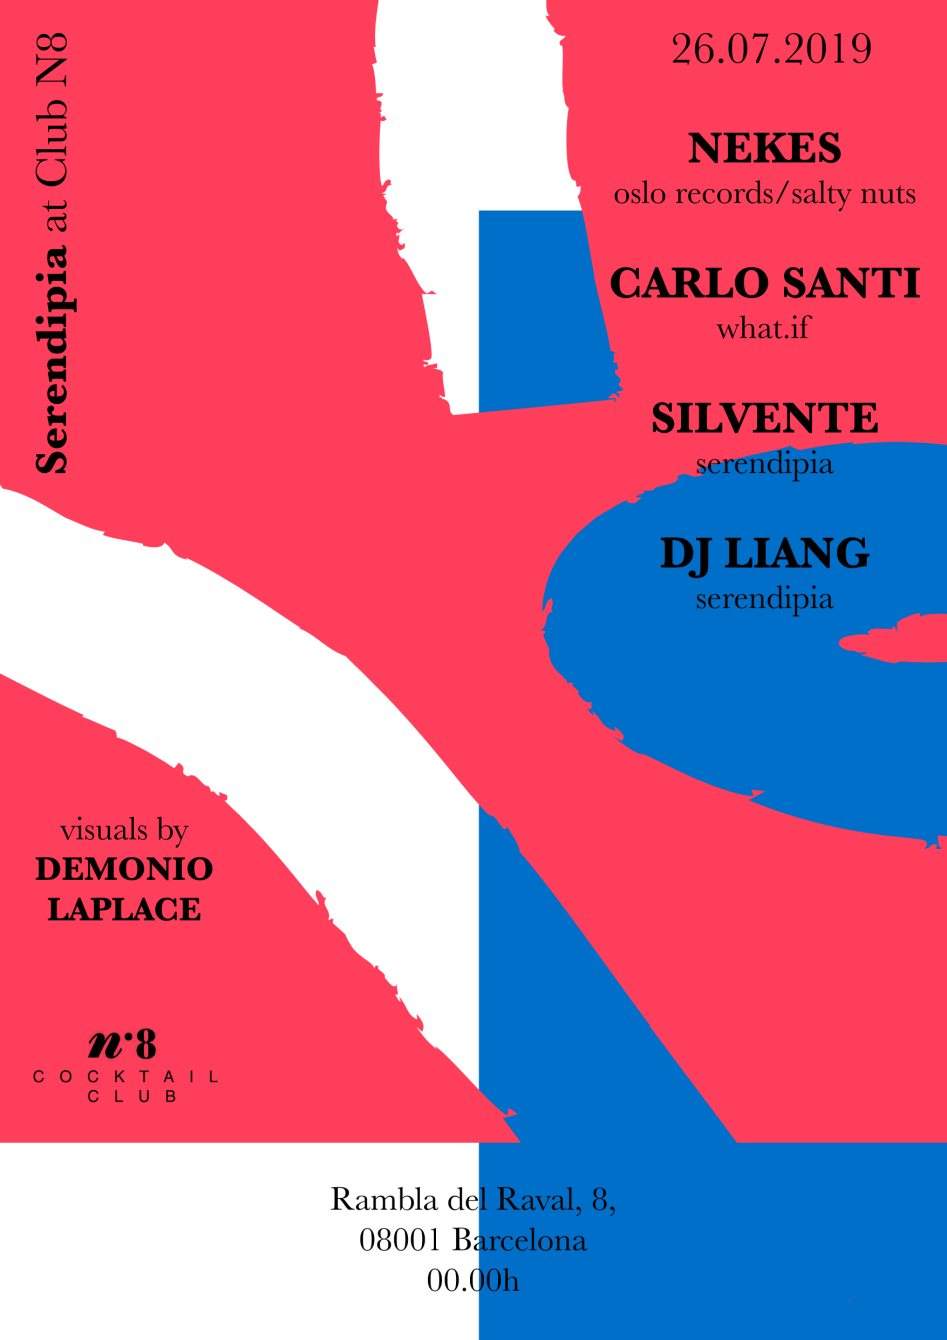 Serendipia presents Nekes, Carlo Santi, Silvente and DJ LIANG - Página trasera